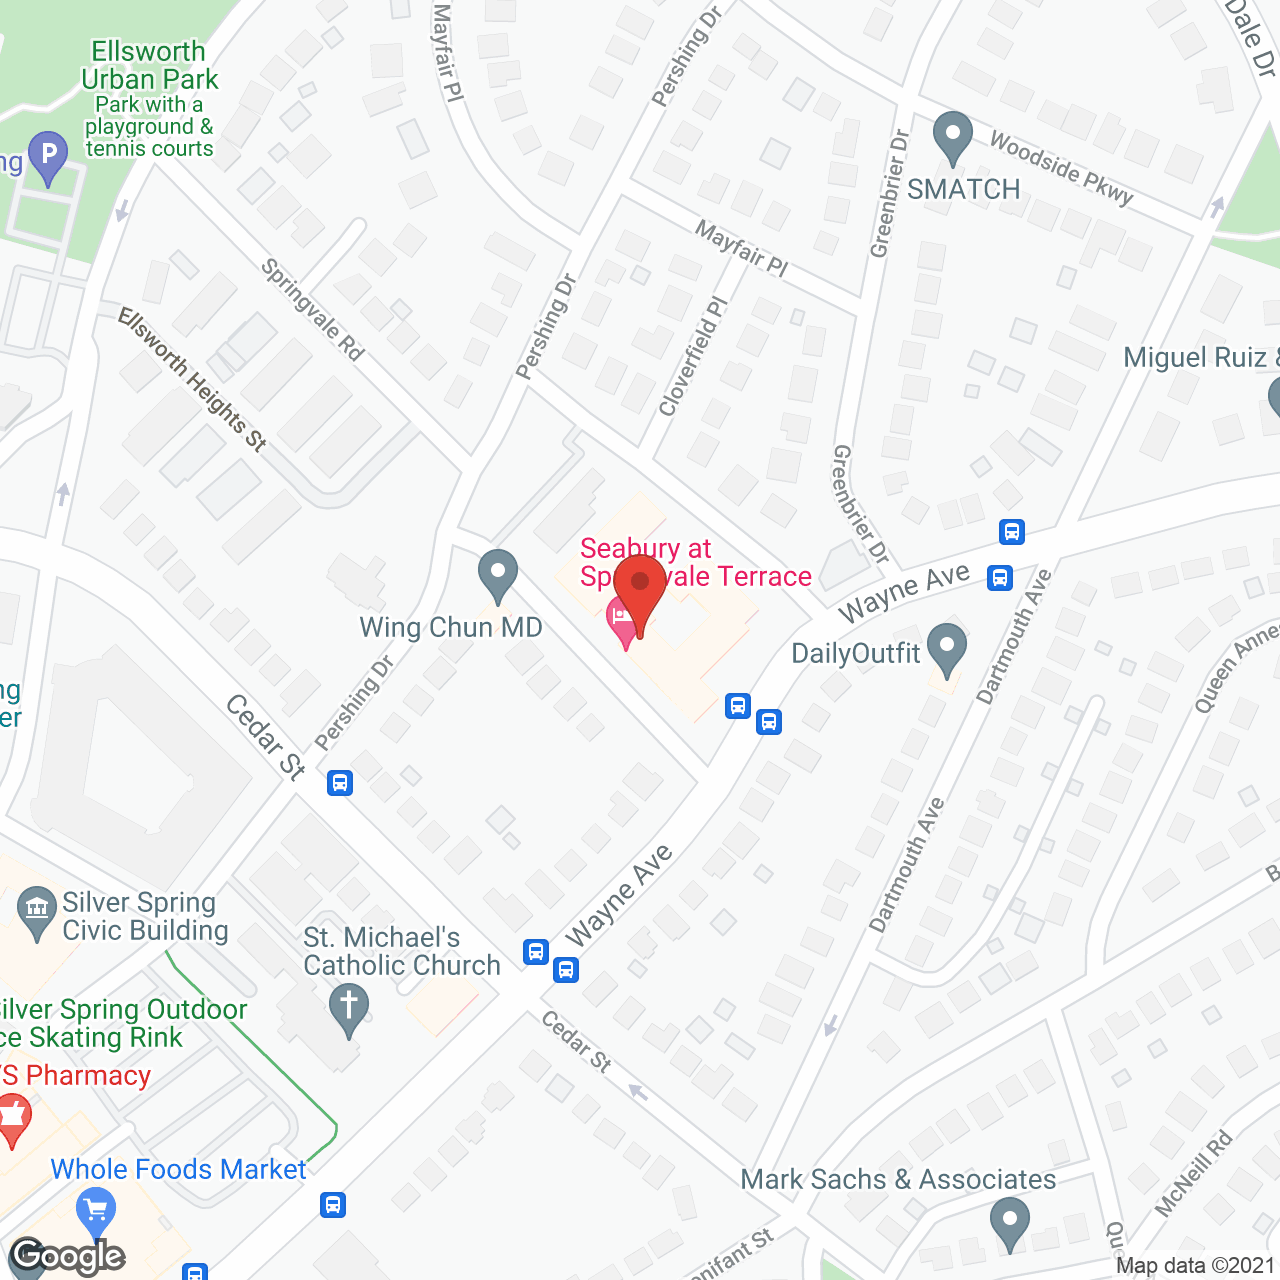 Seabury at Springvale Terrace in google map